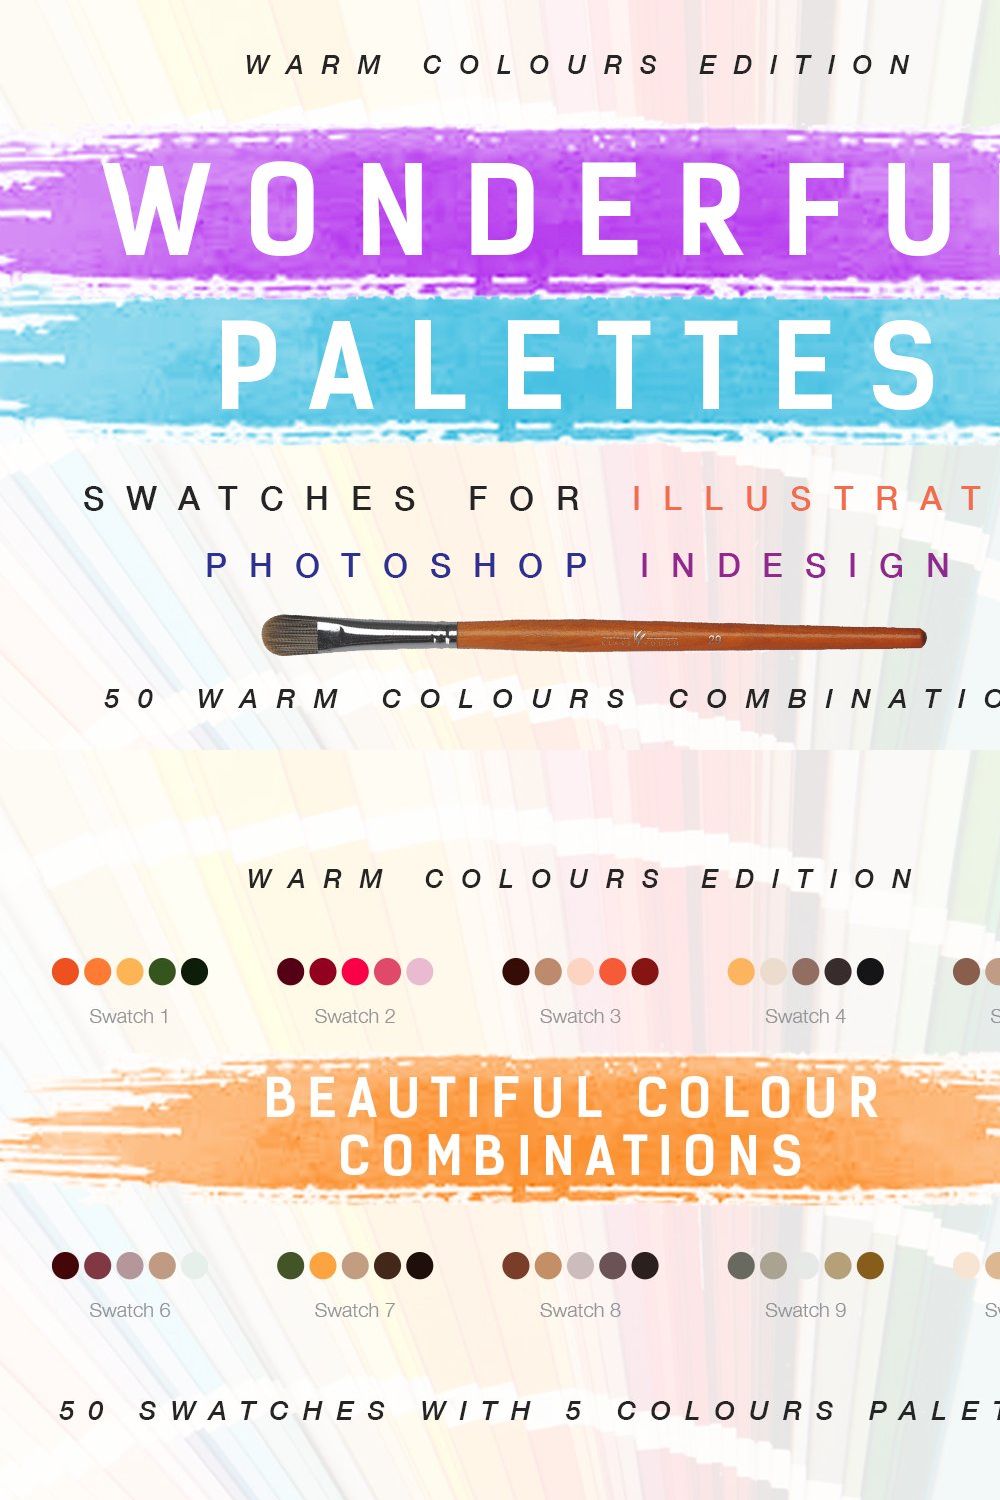 Wonderful Palettes - Vol.1 pinterest preview image.